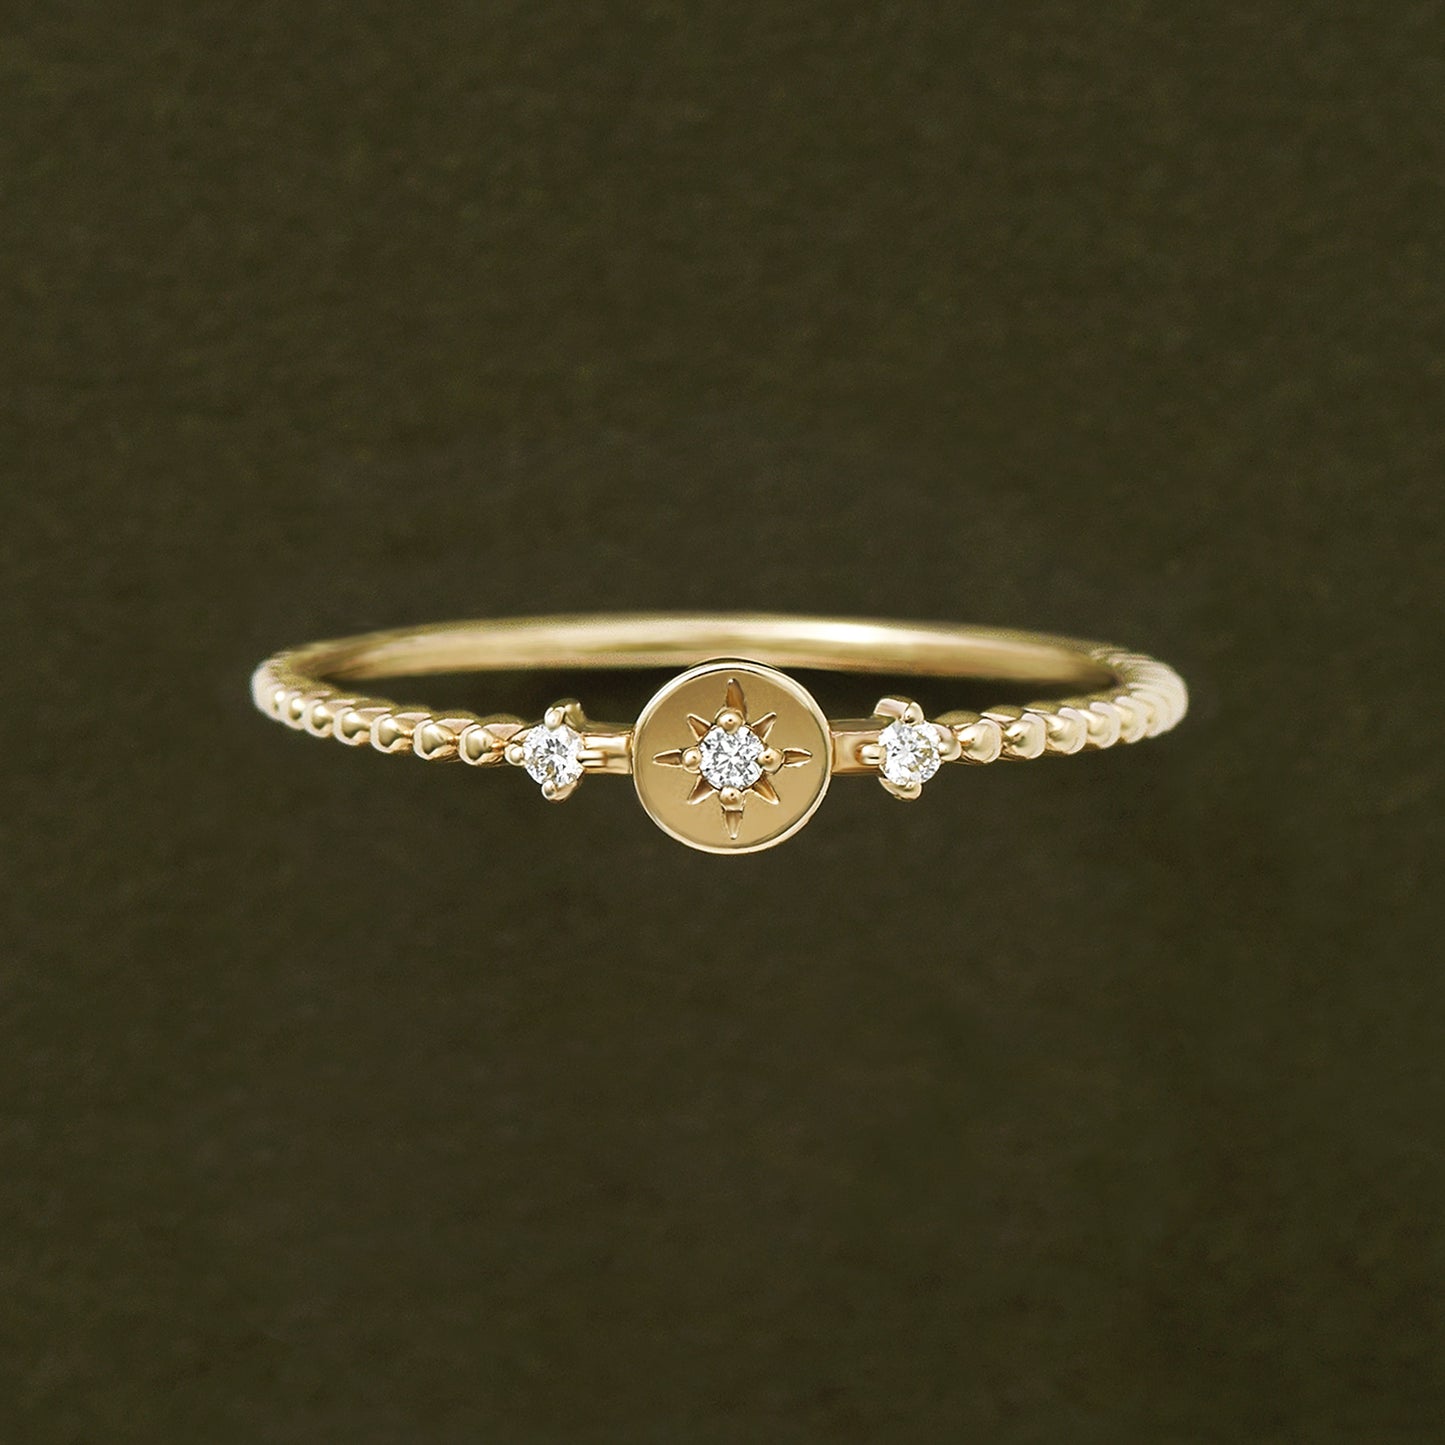 10K Yellow Gold Milgrain Diamond Ring - Product Image